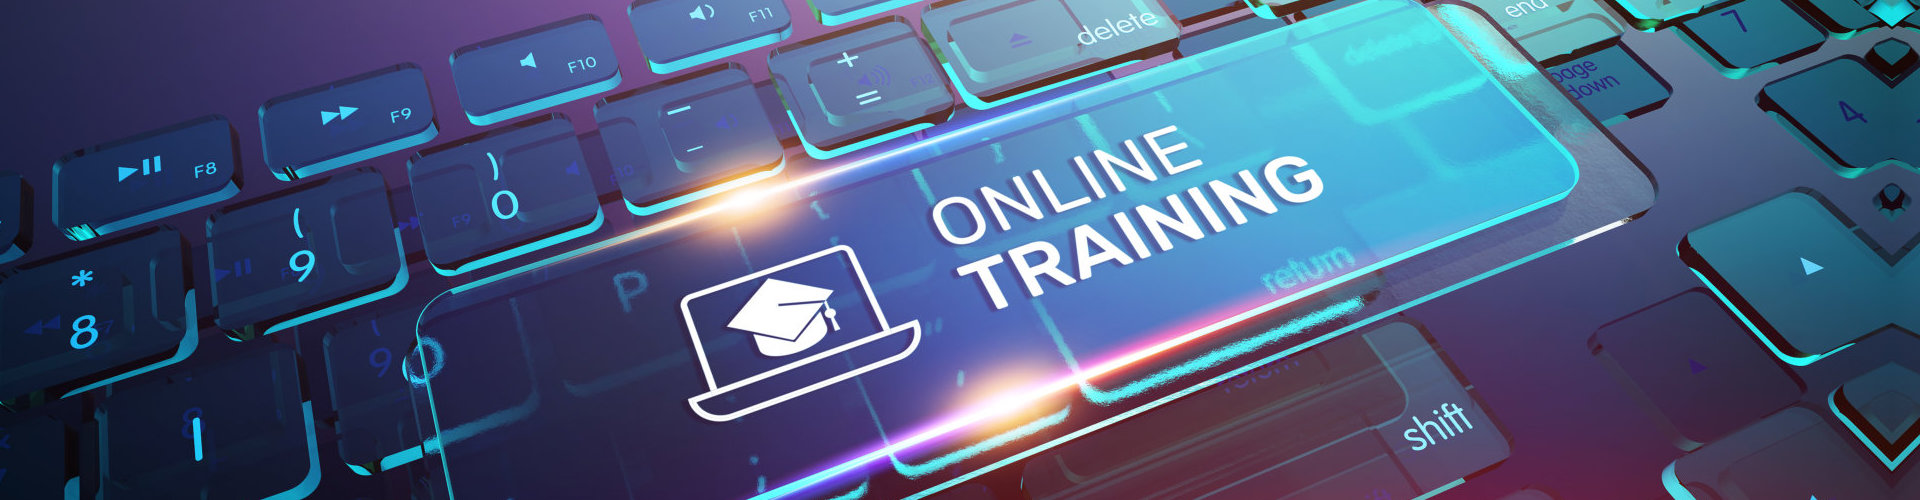 online training concept